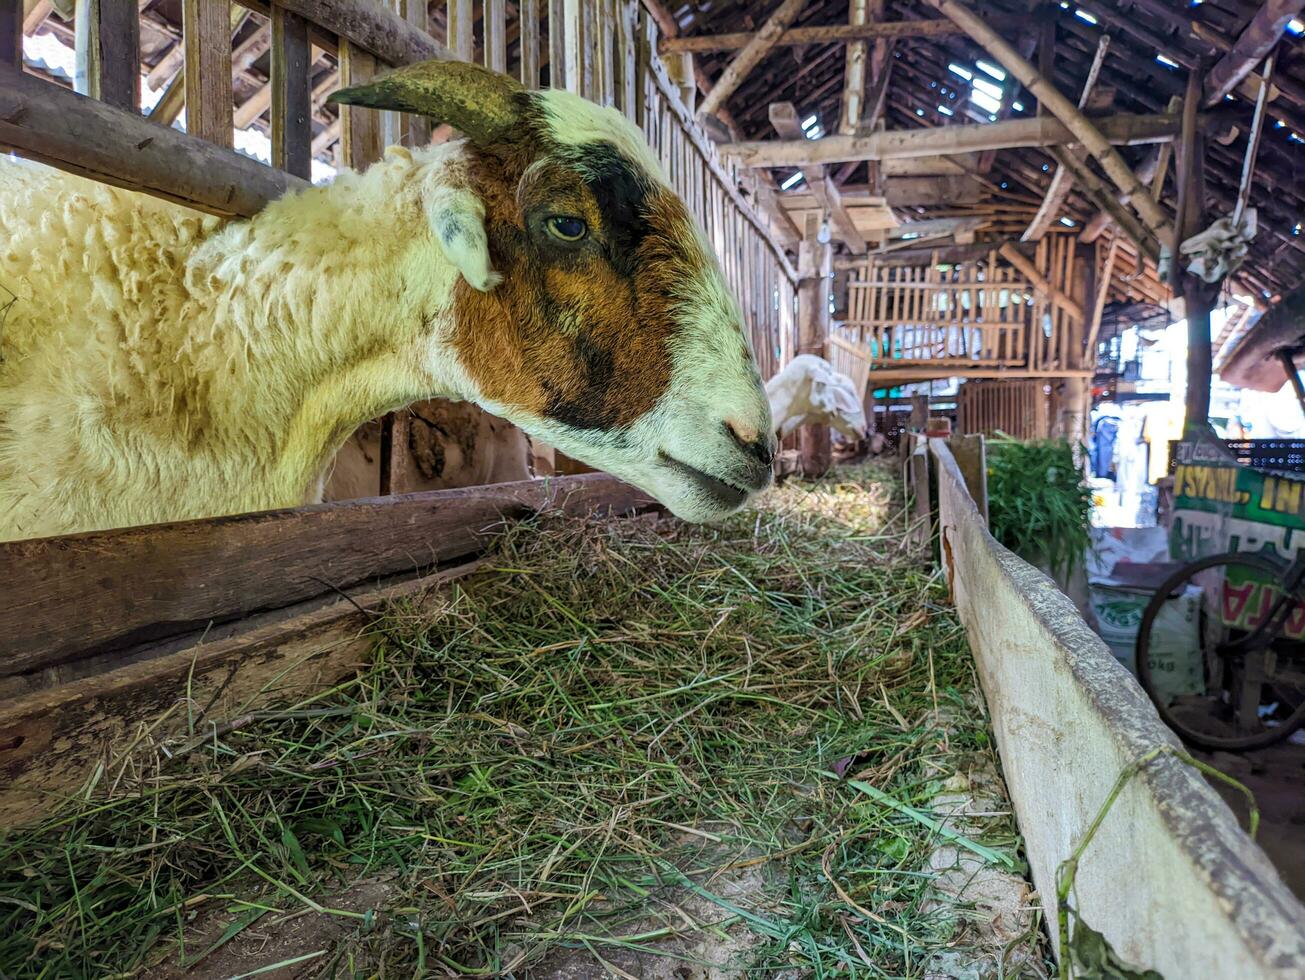 A cattle goats or Capra aegagrus hircus in the pen photo